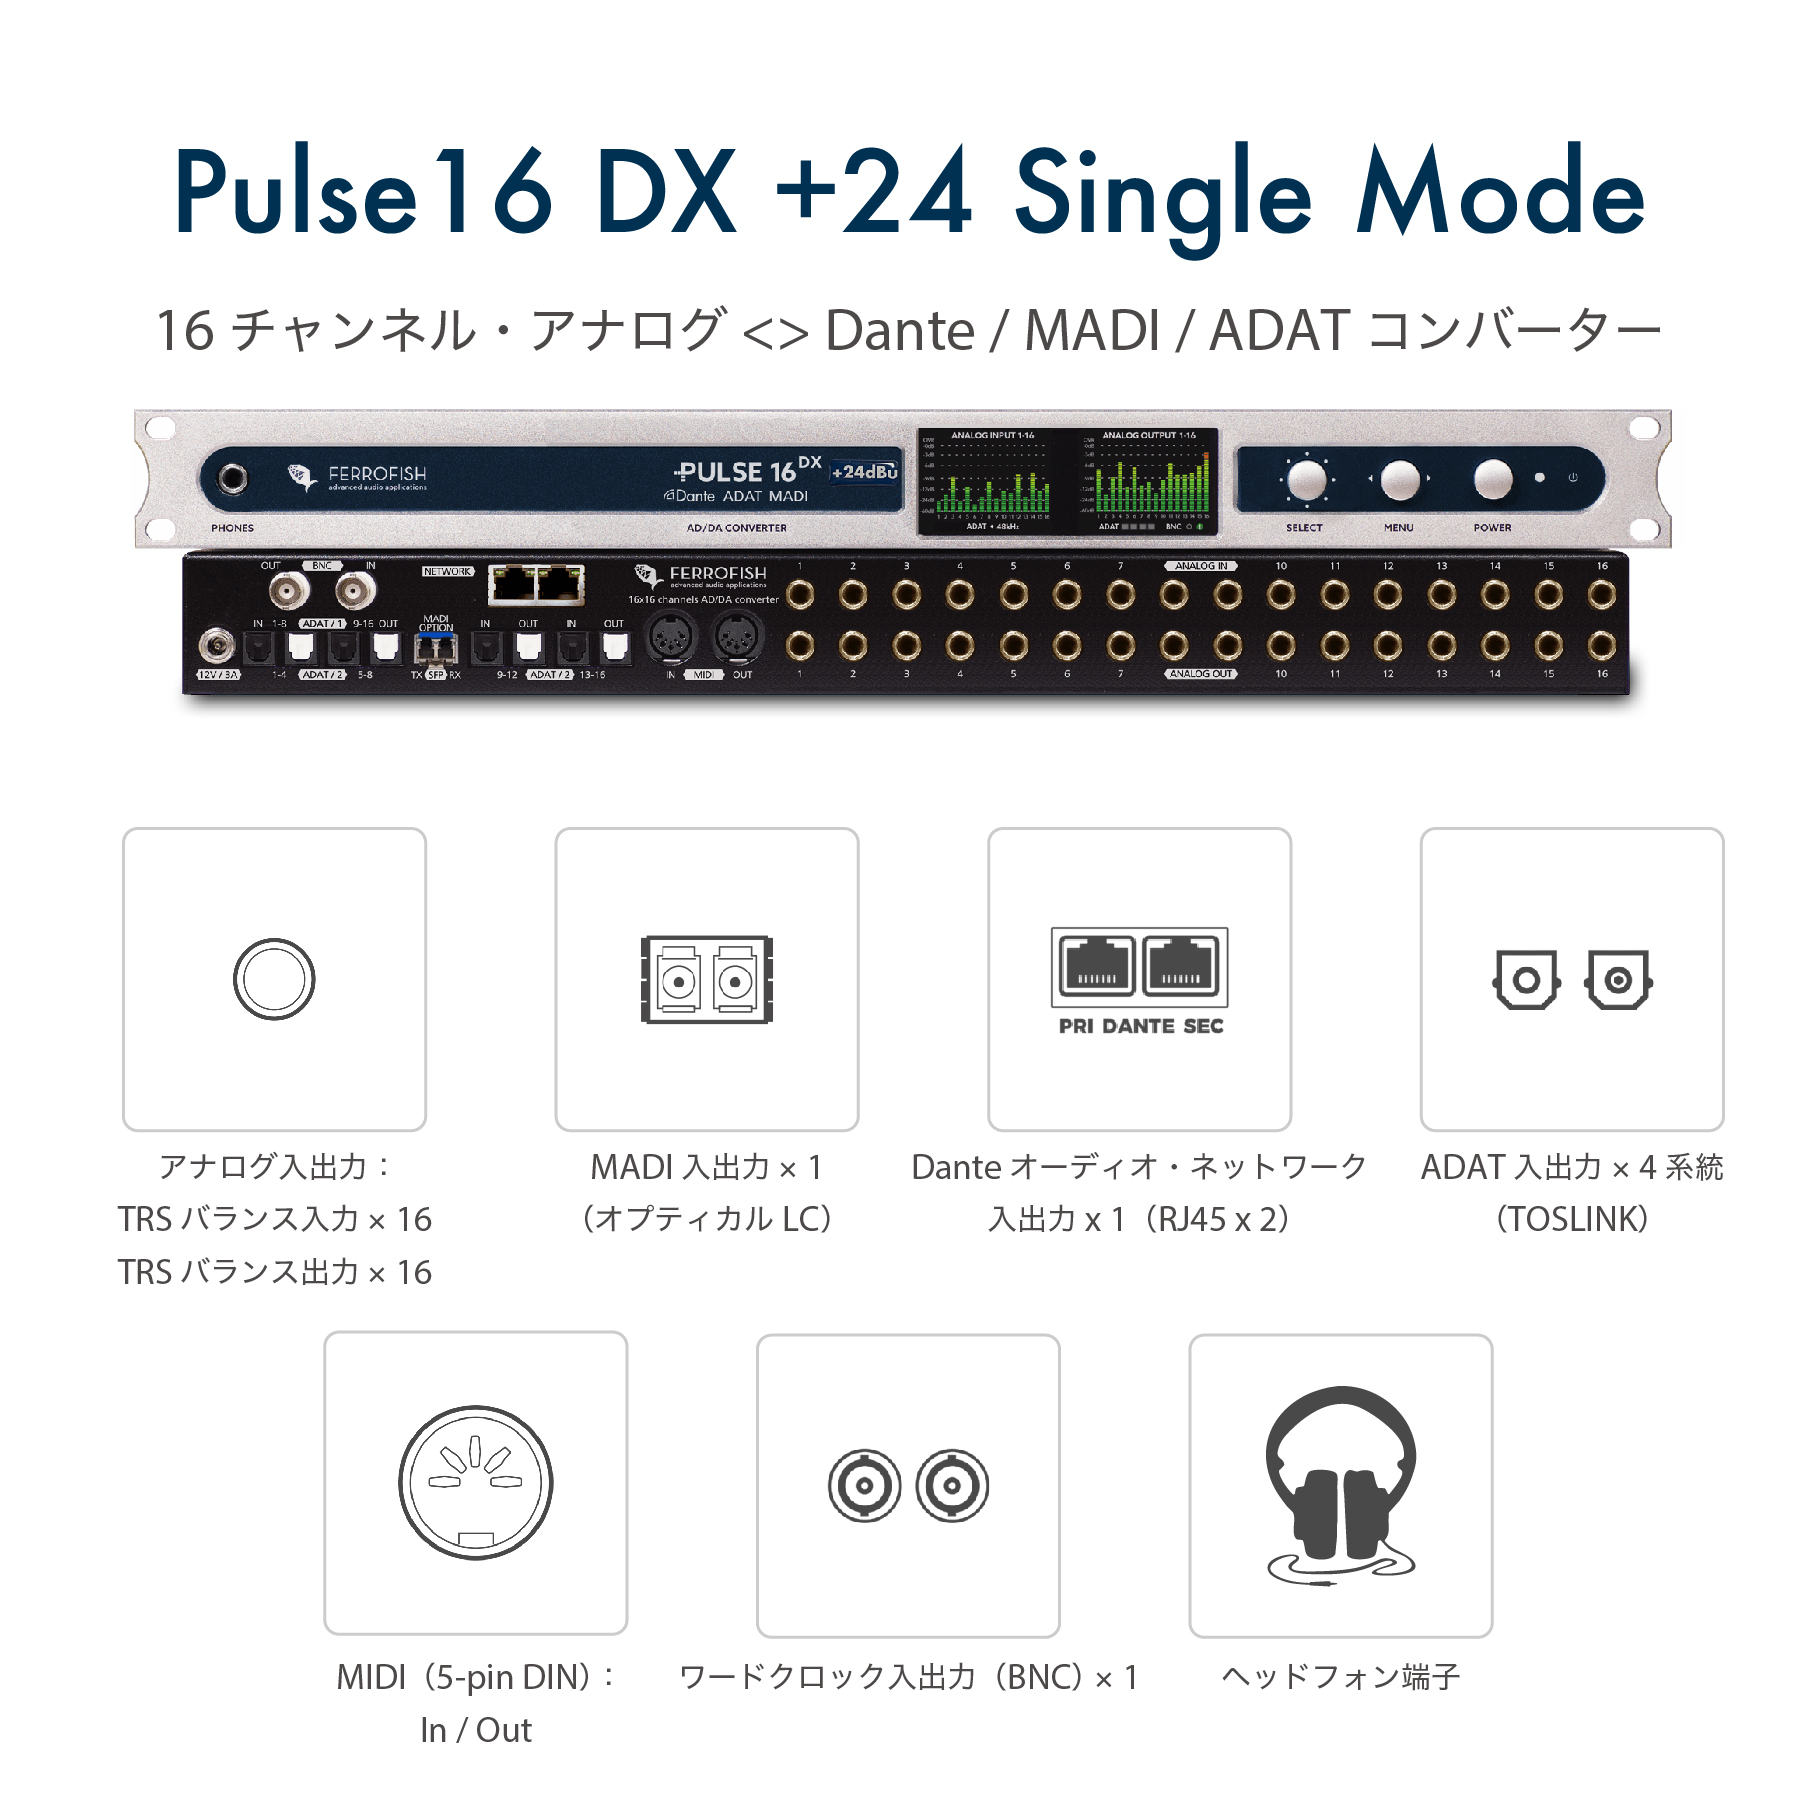 Pulse16 DX +24 Single Mode